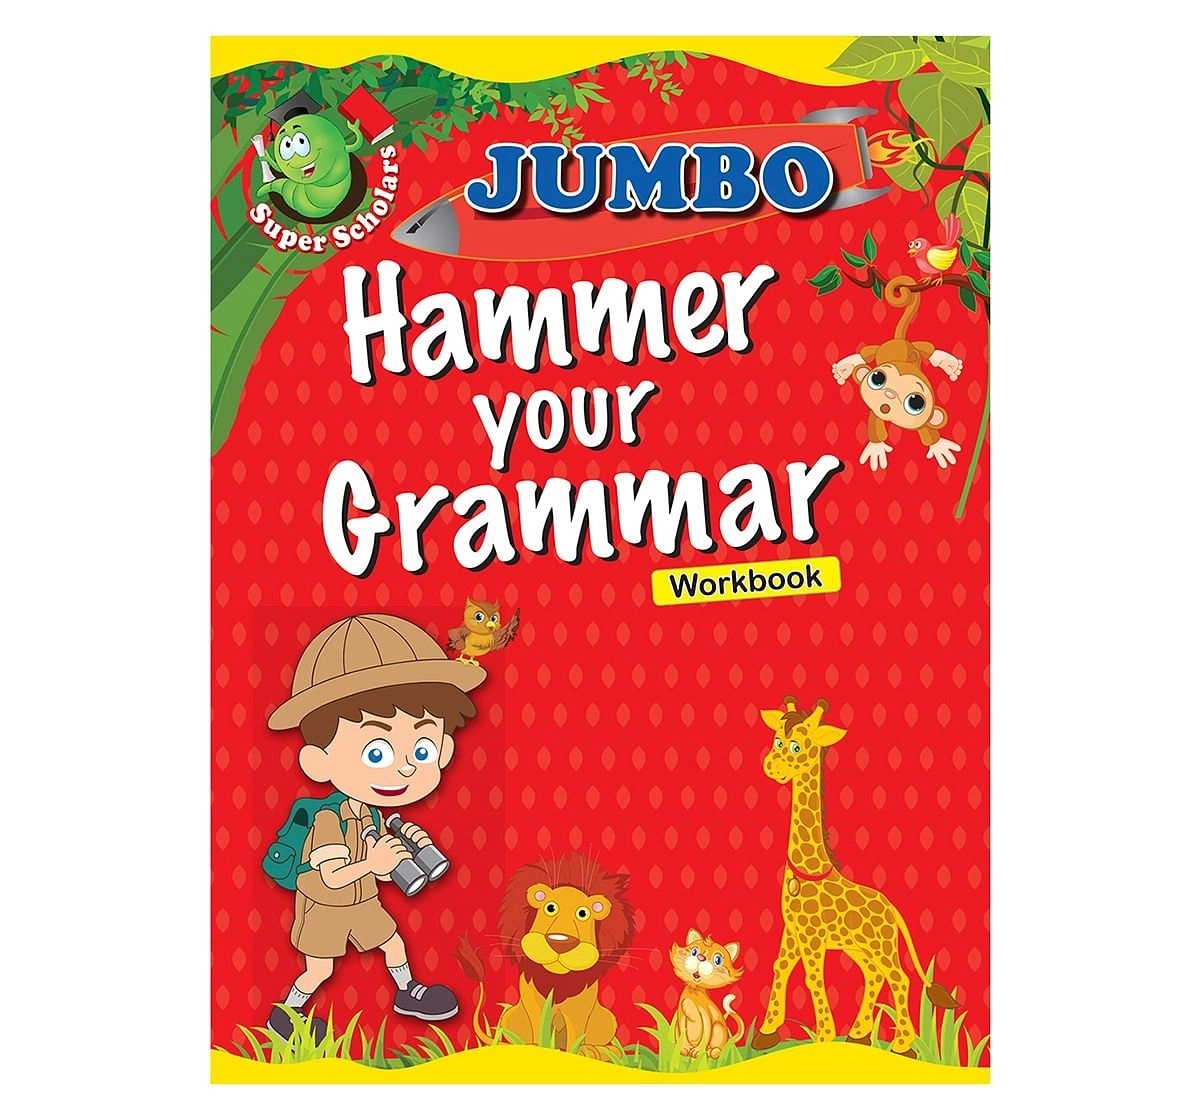 Grammer : Jumbo Hammer Your Grammer Activity Workbook, 128 Pages Book, Paperback